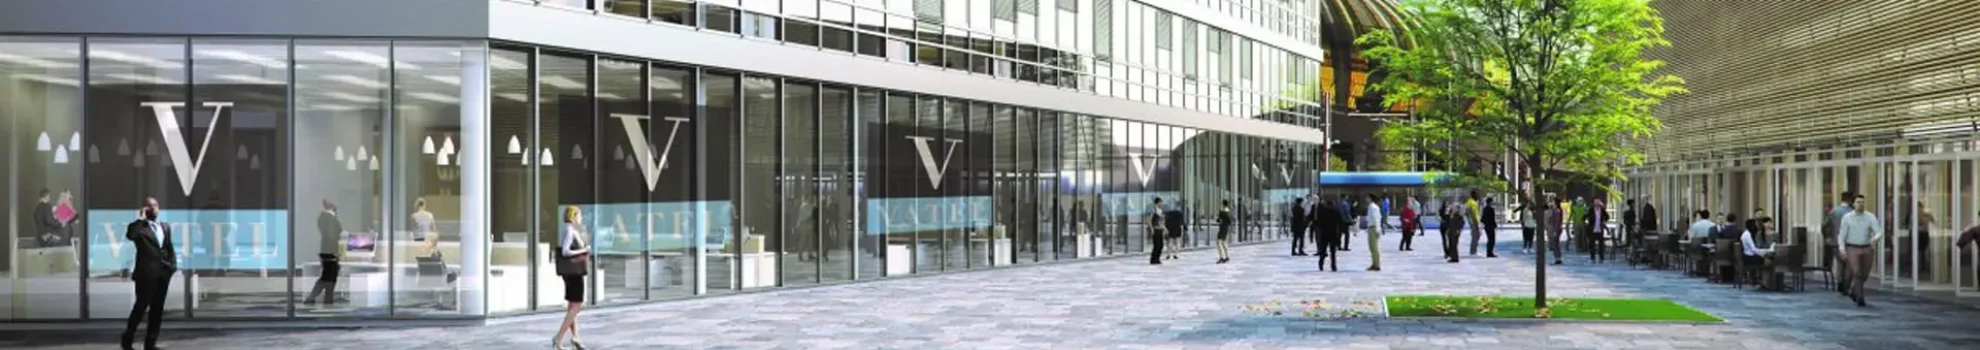 vatel - hotel tourism business school